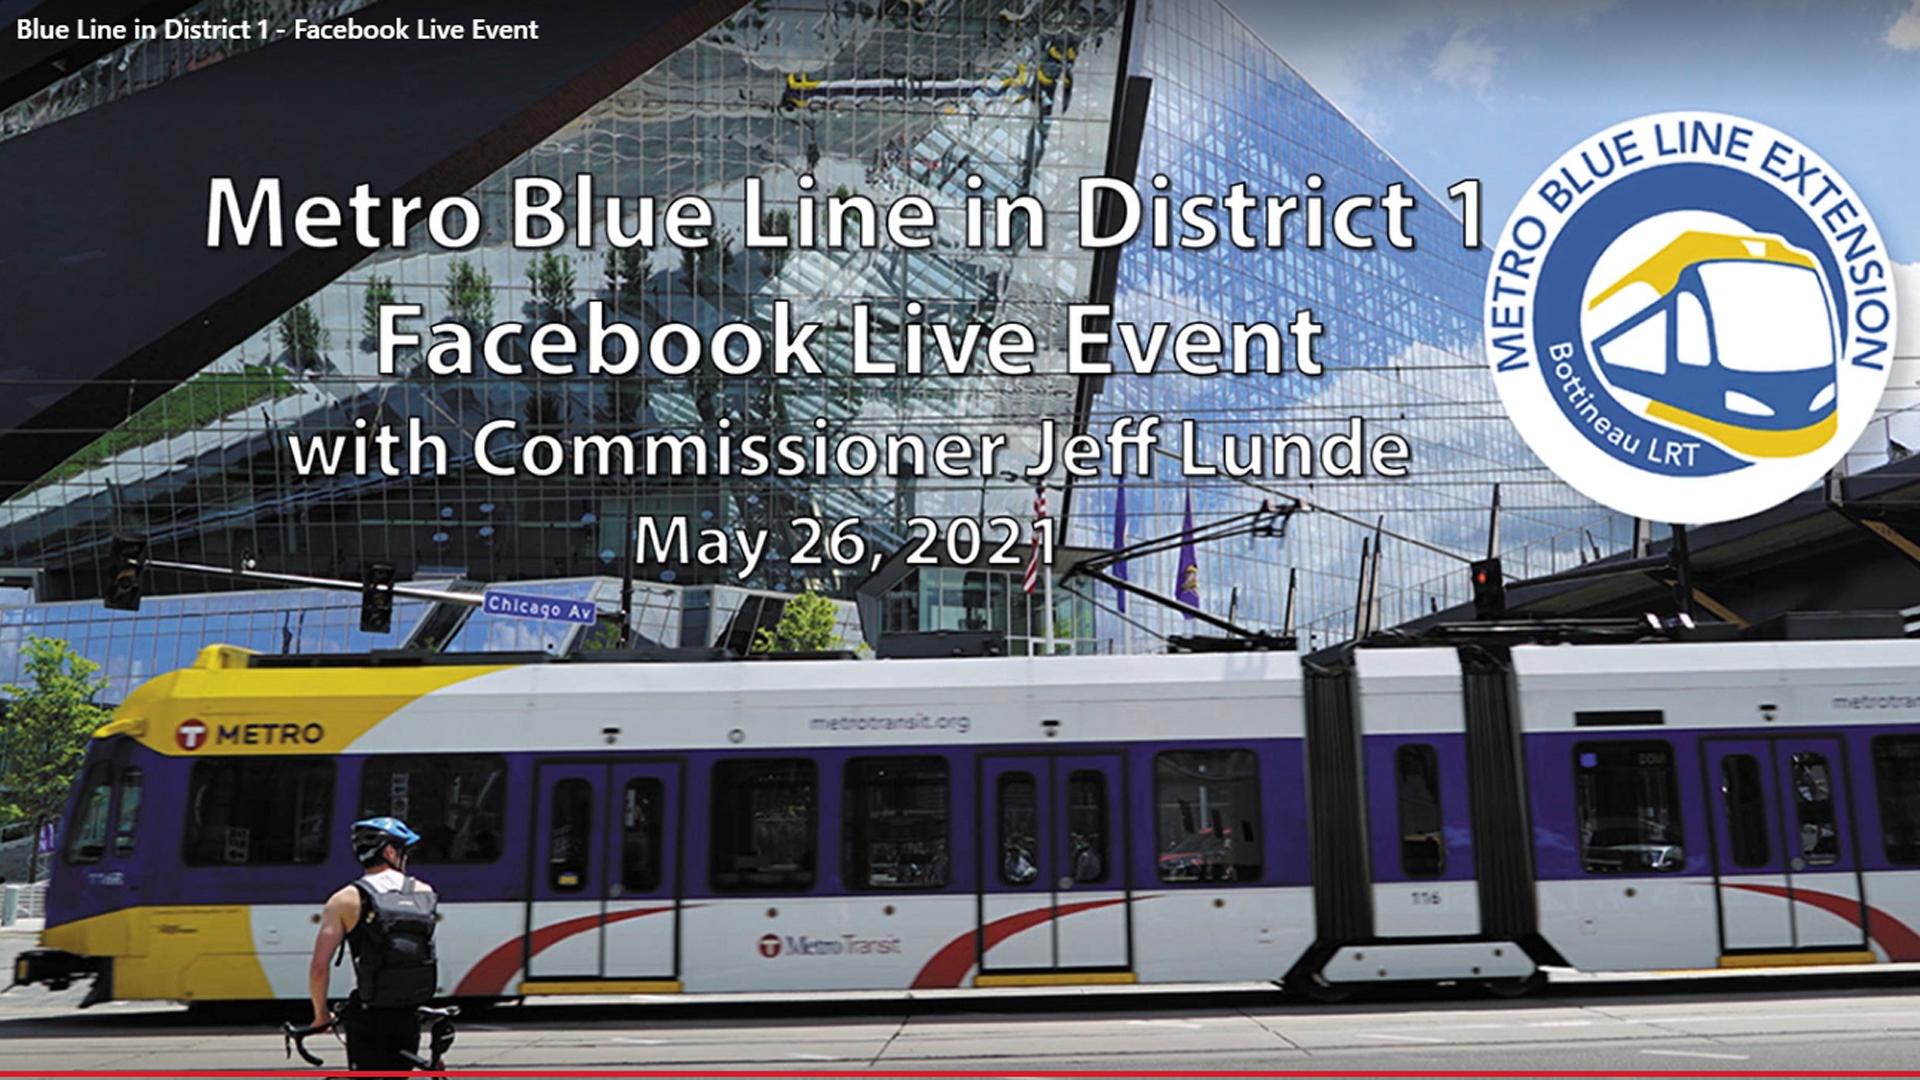 District 1 Metro Blue Line Facebook Live Event title page